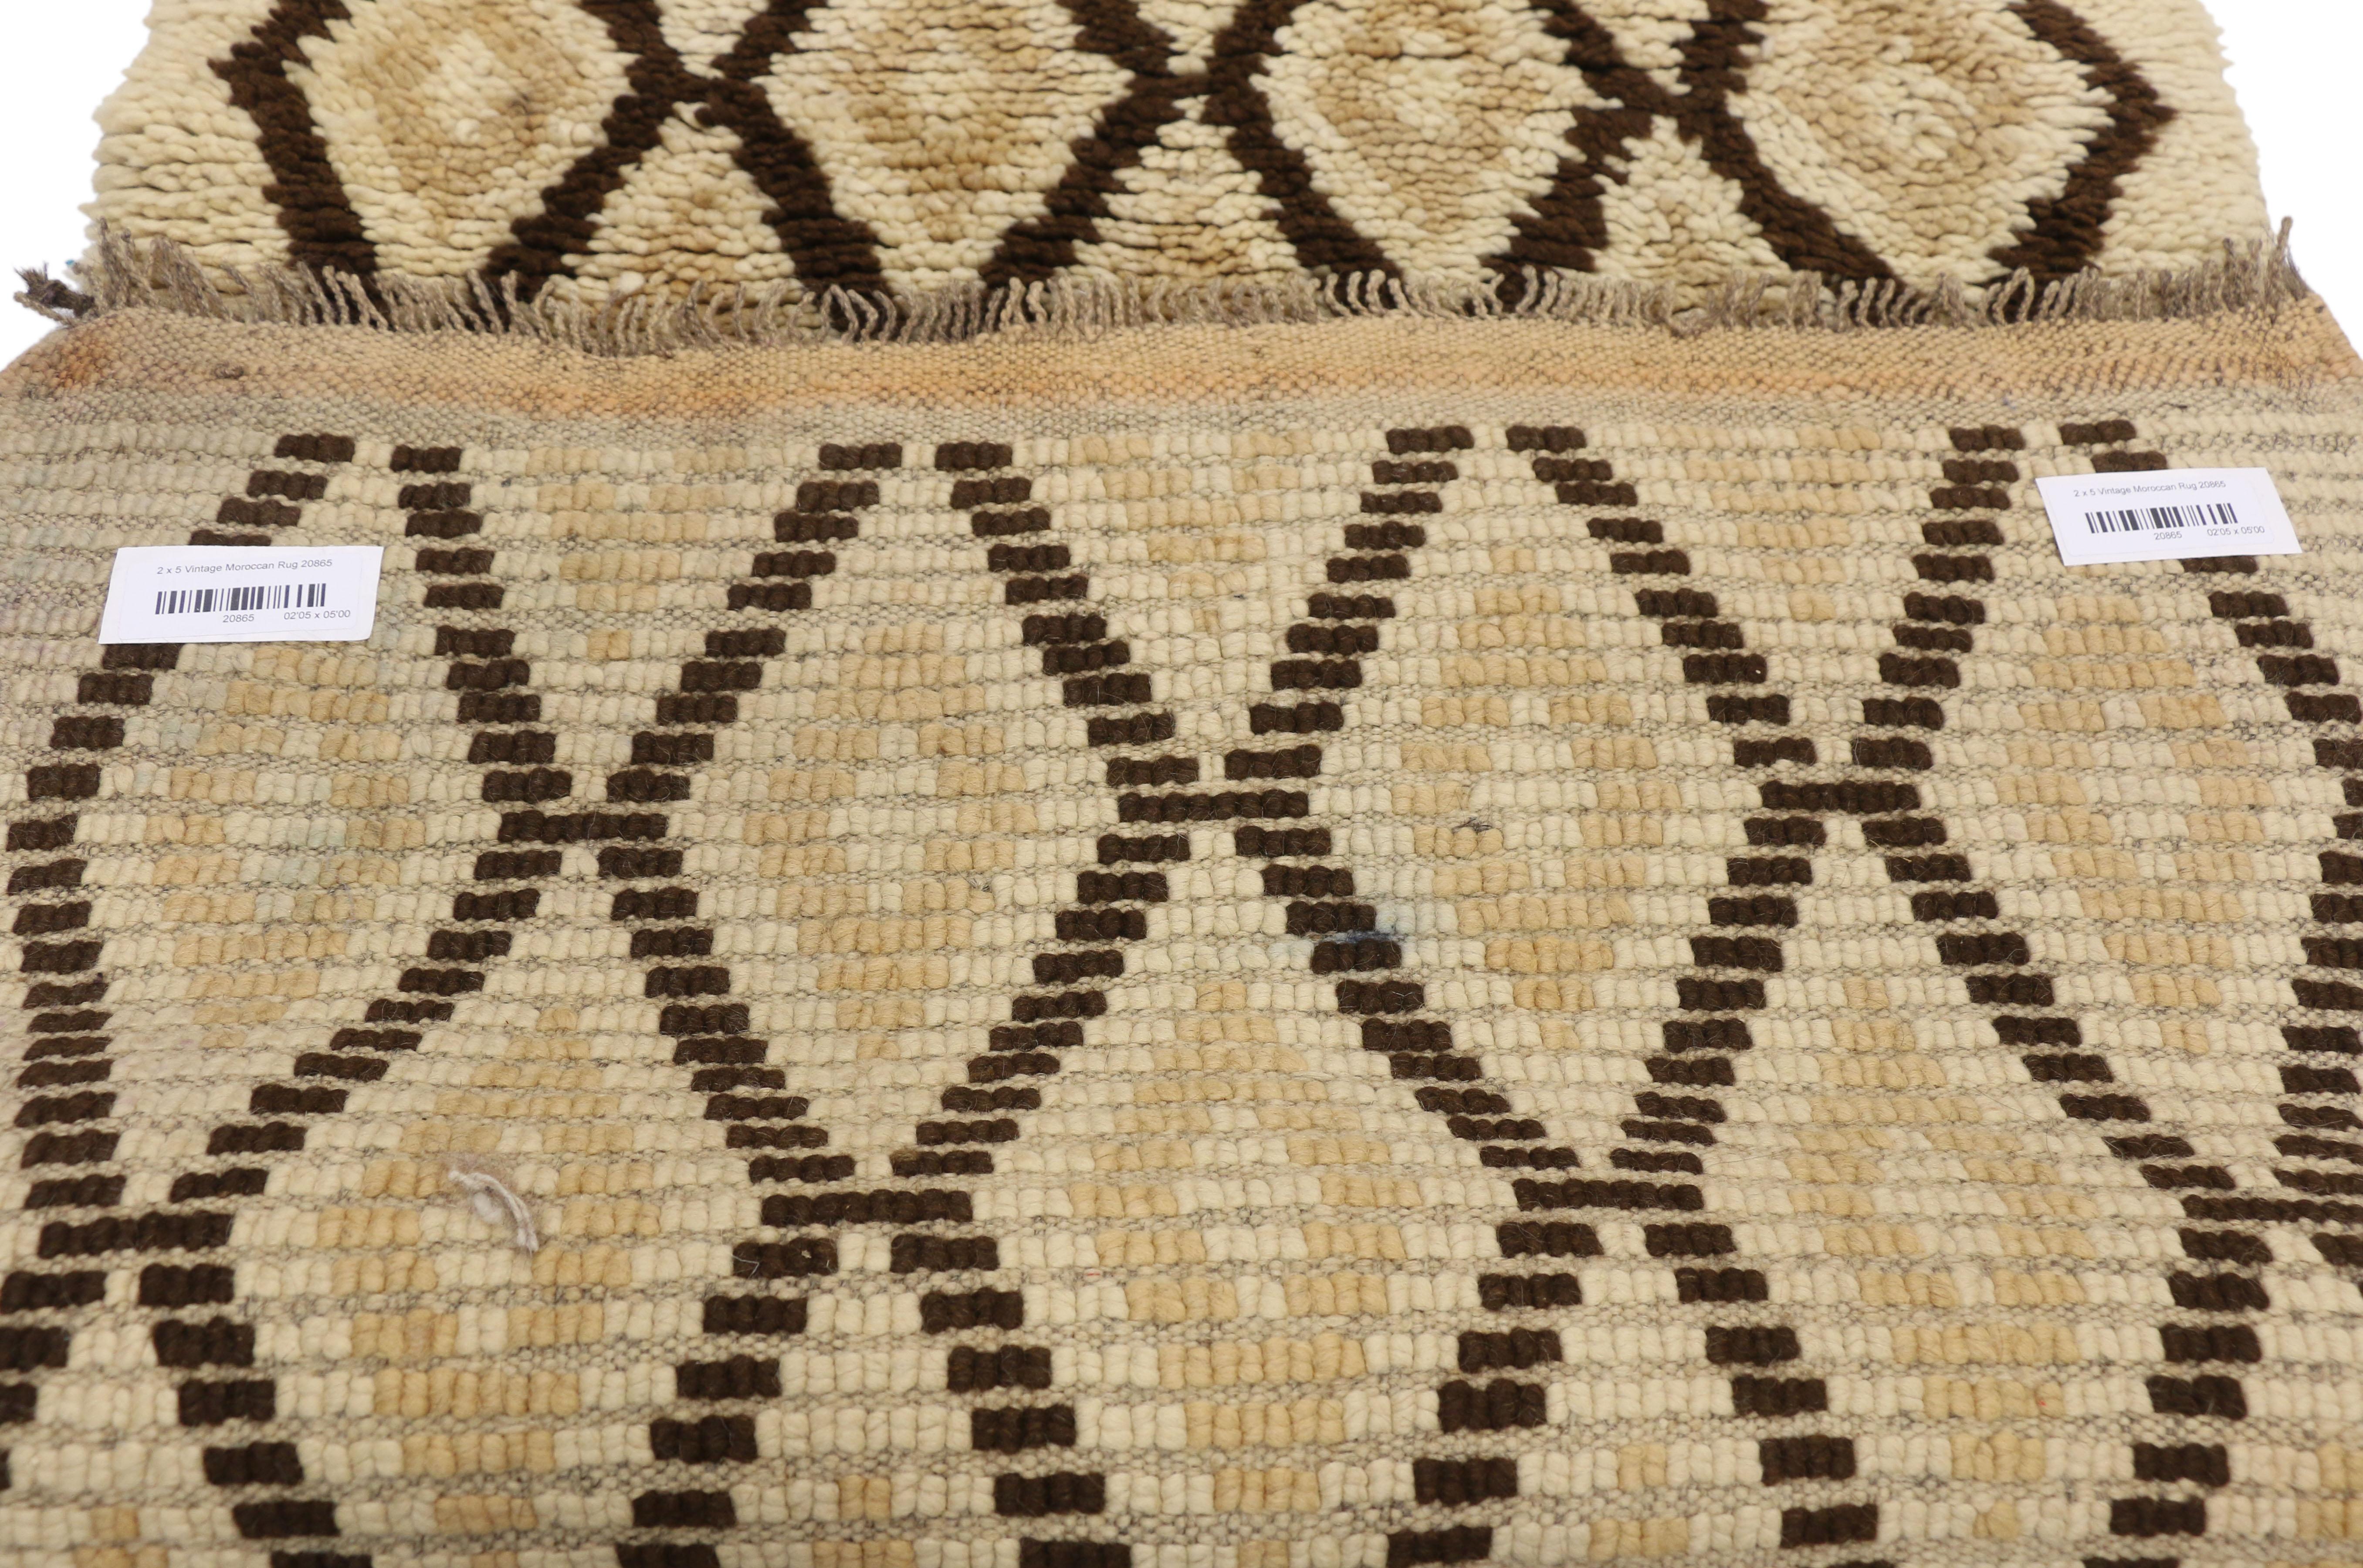 Wool Vintage Berber Moroccan Rug with Tribal Style